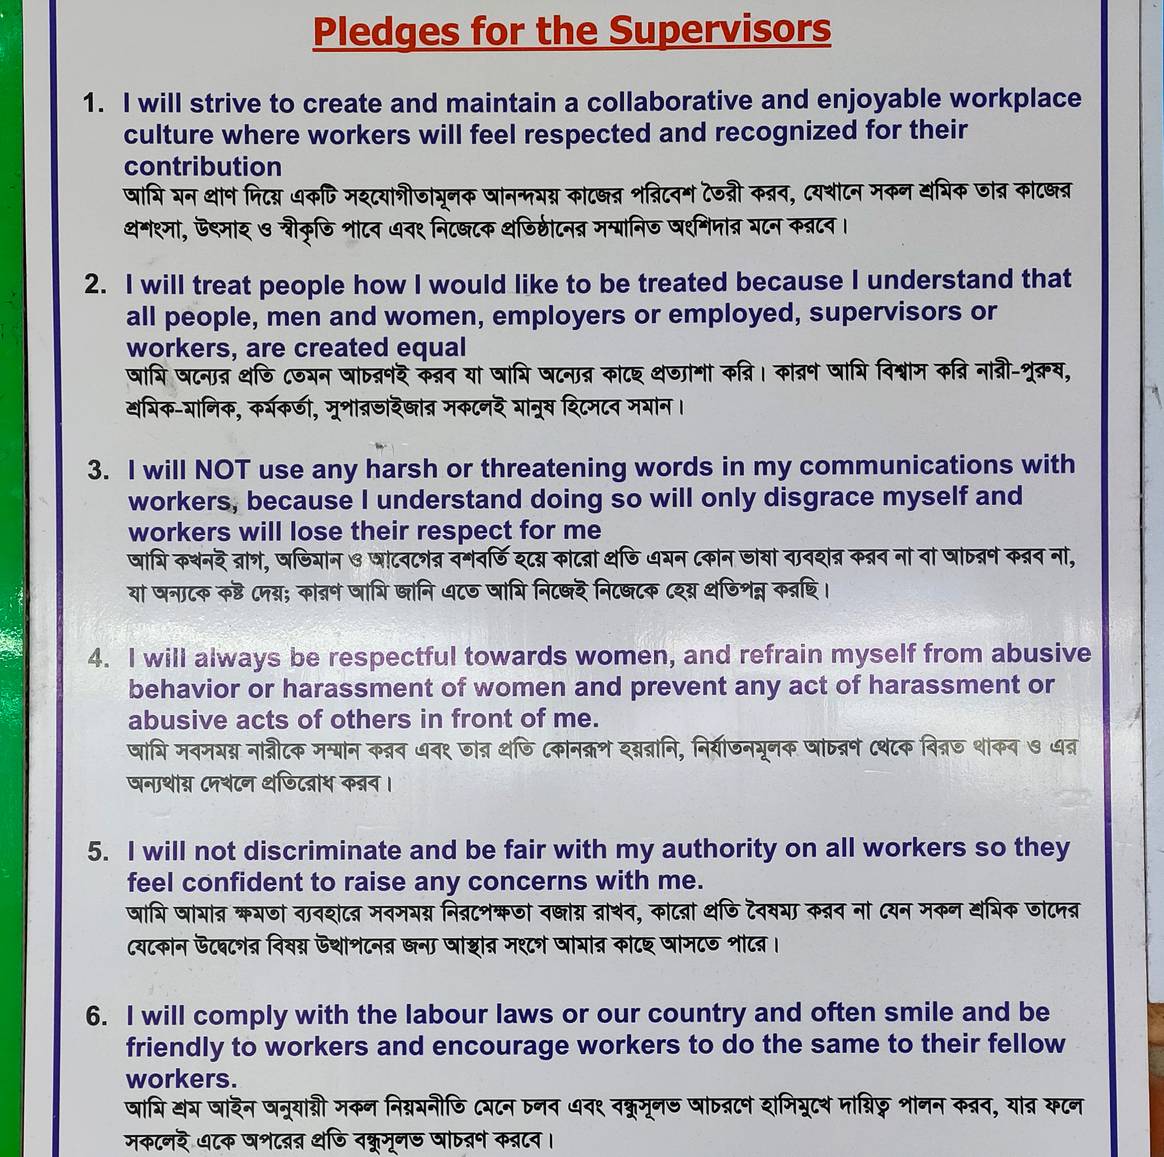 supervisors’ pledges